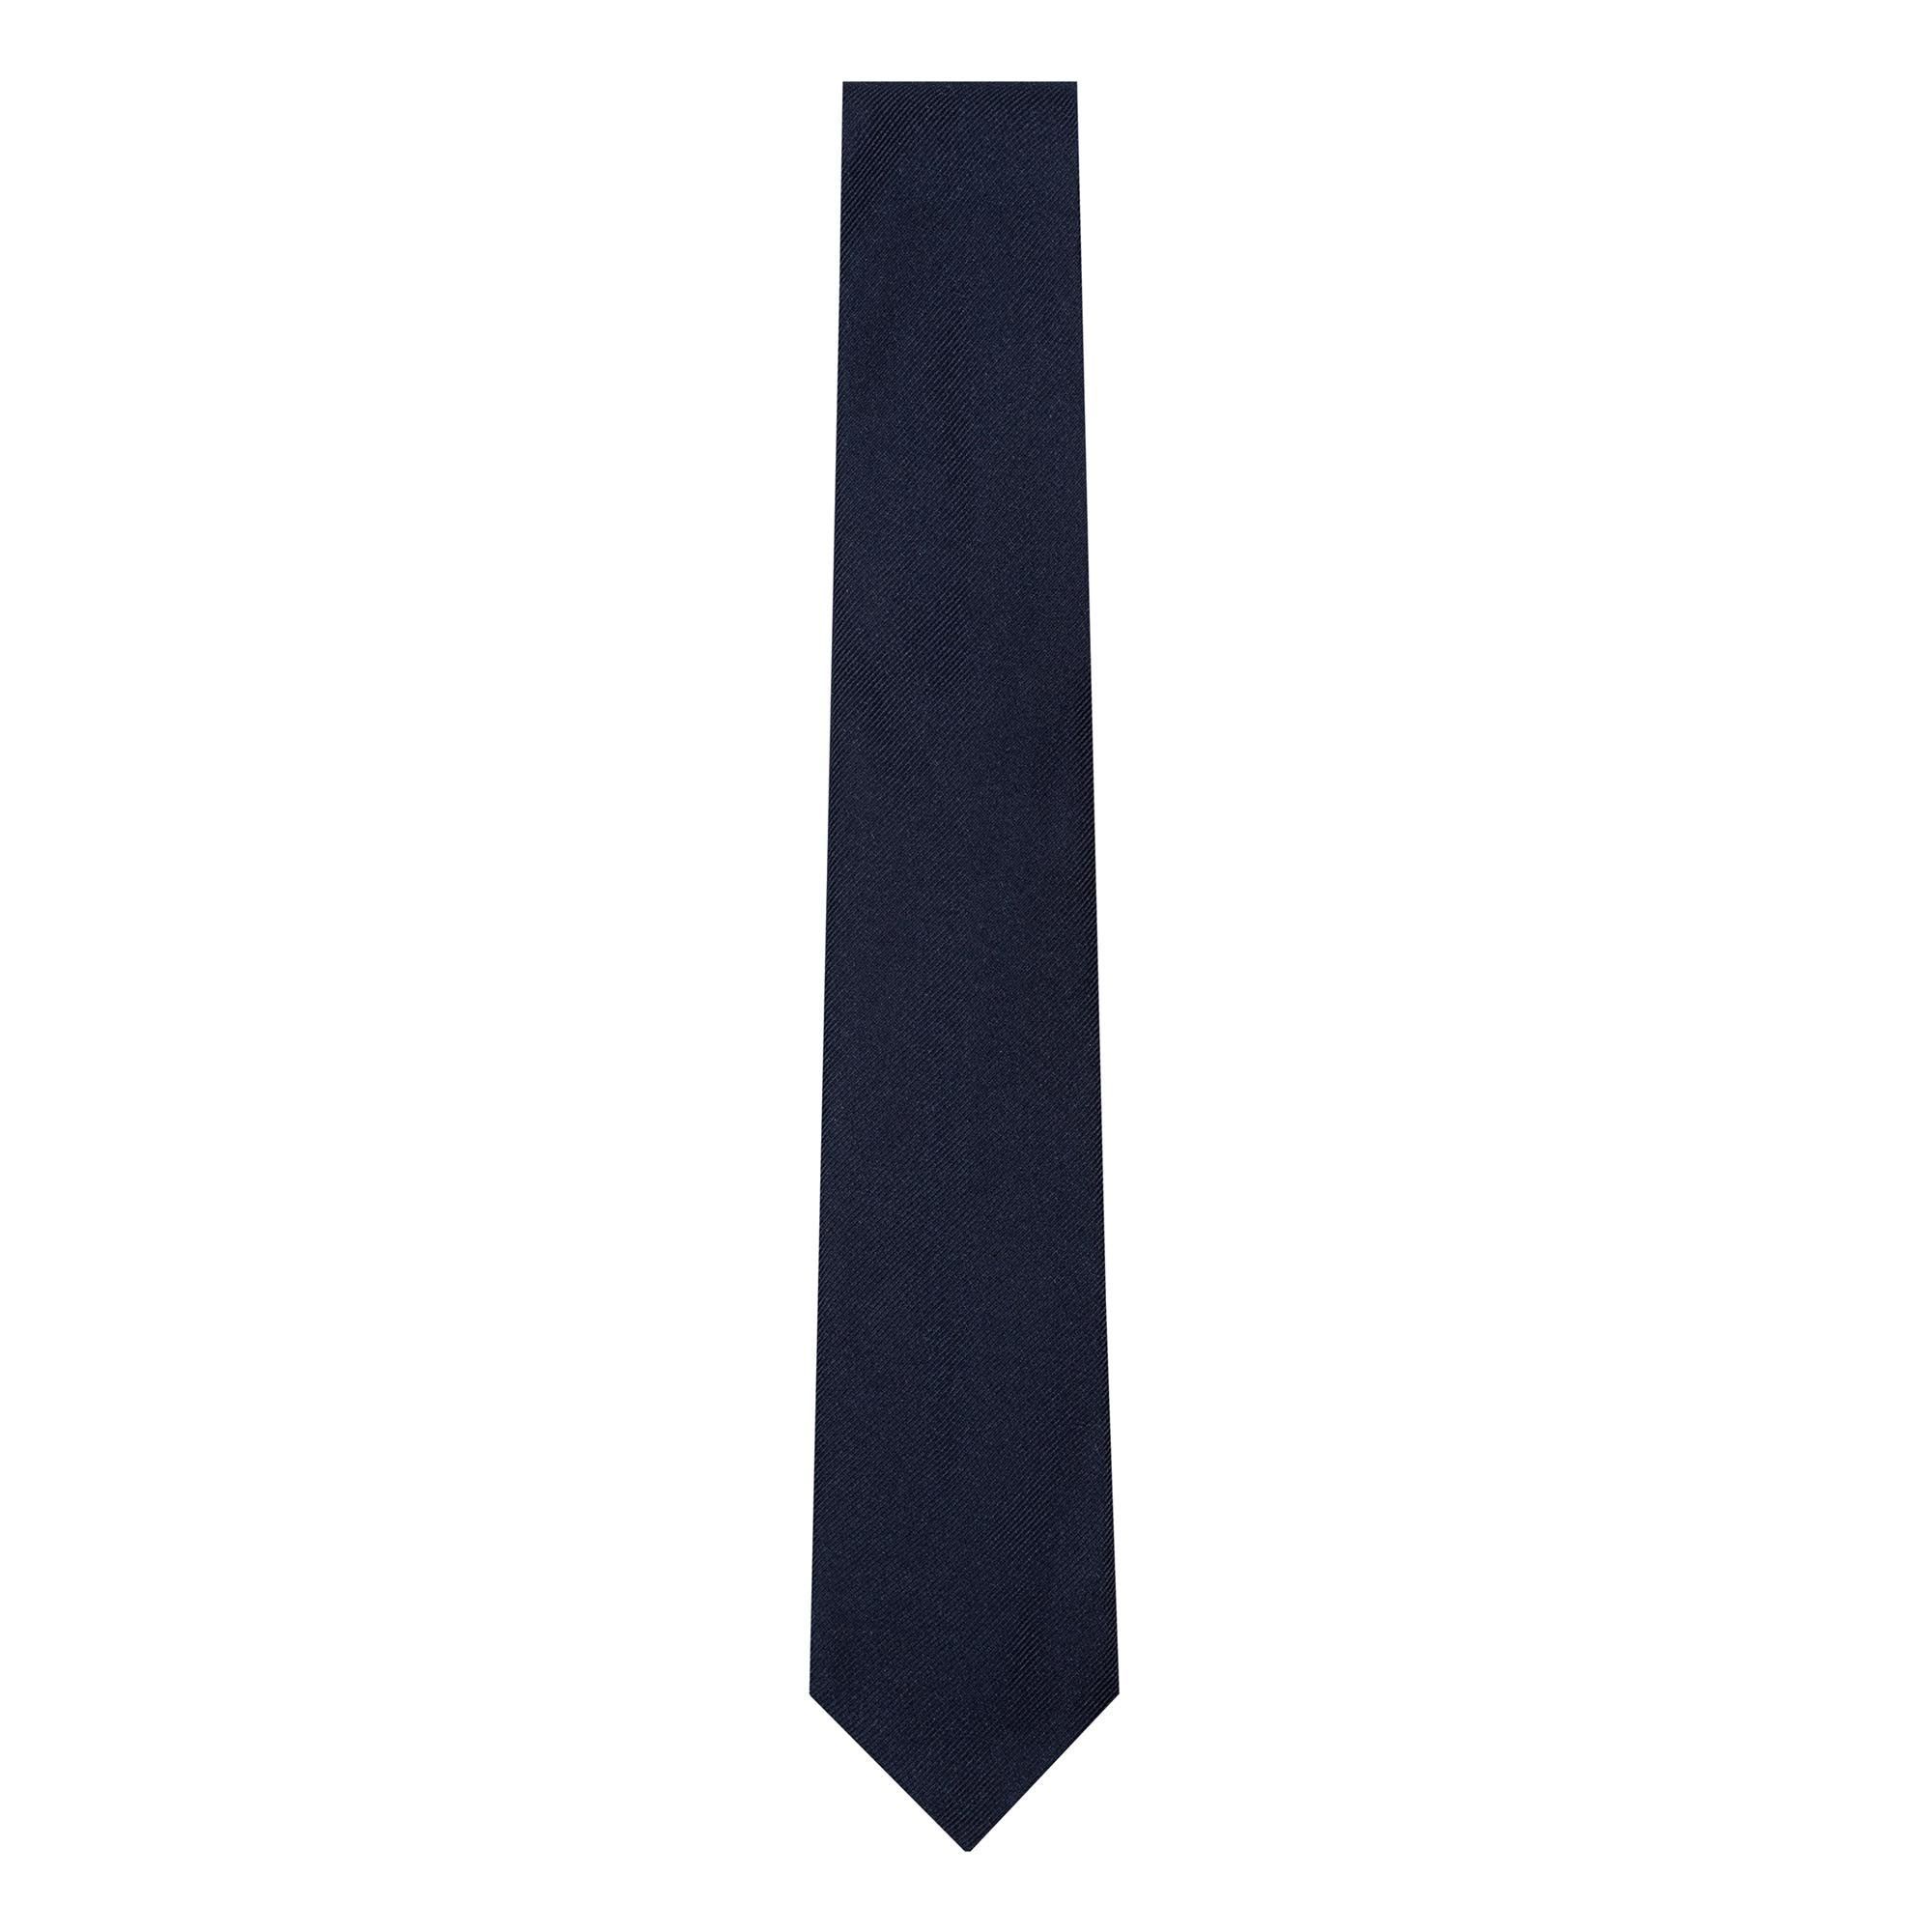 Solid blue navy tie